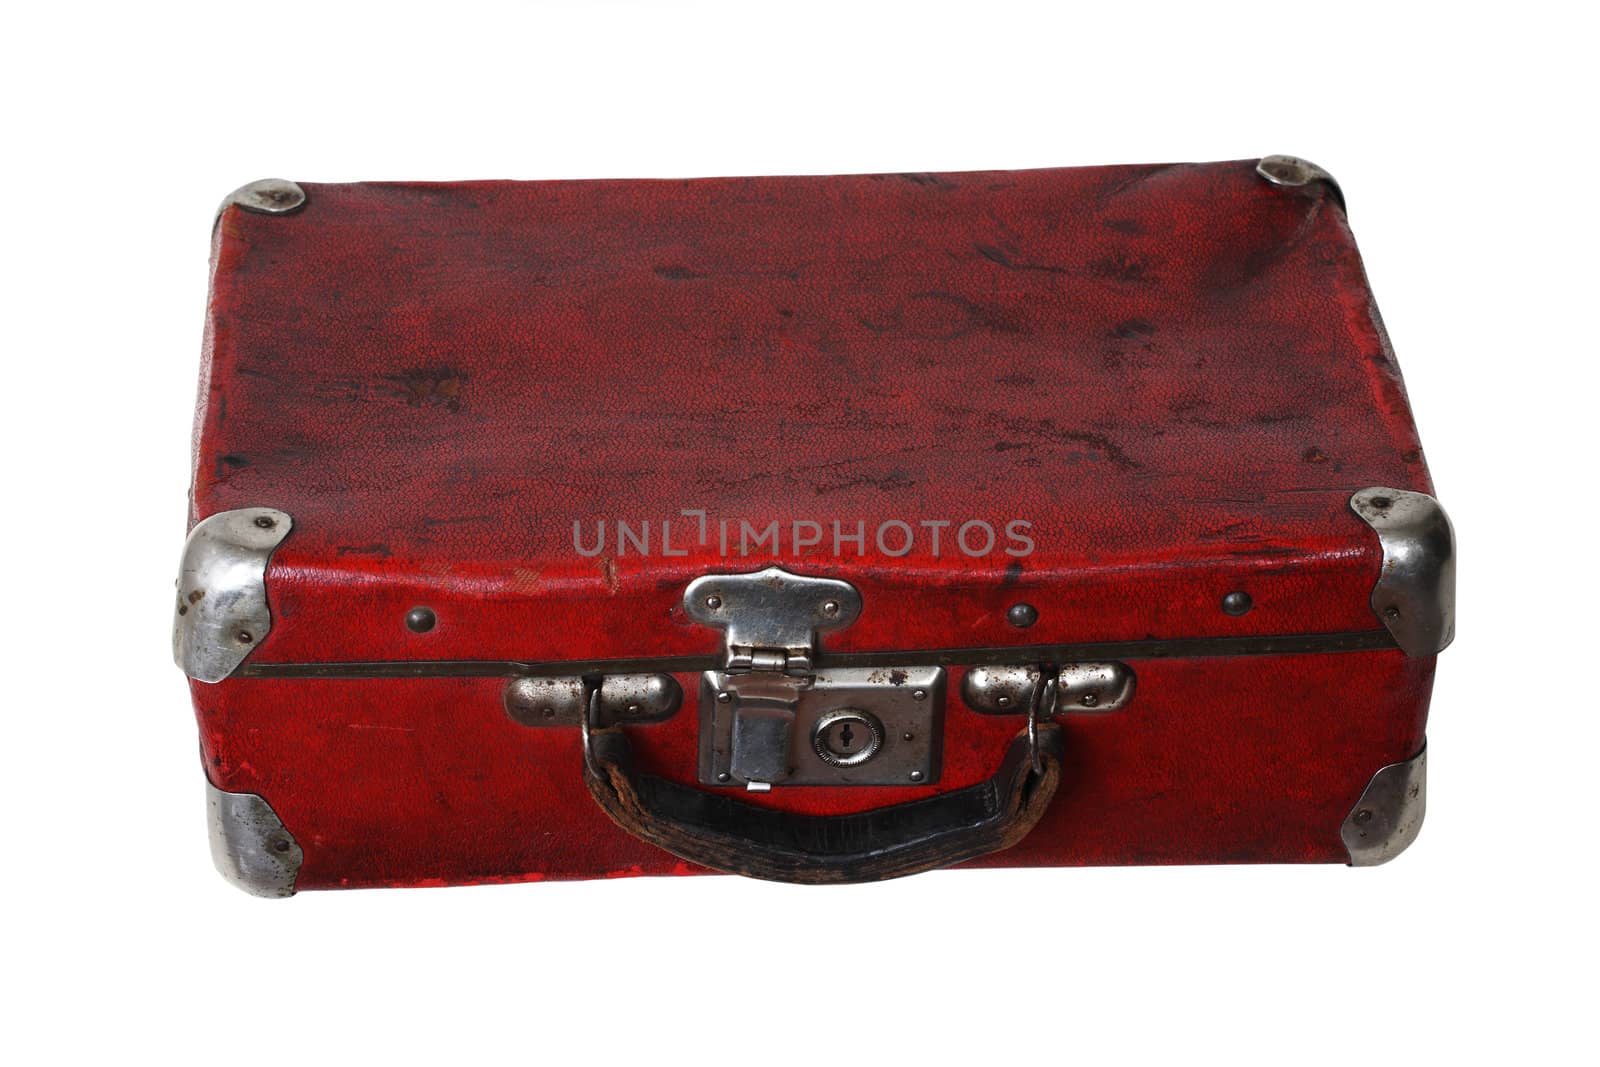 old grunge suitcase